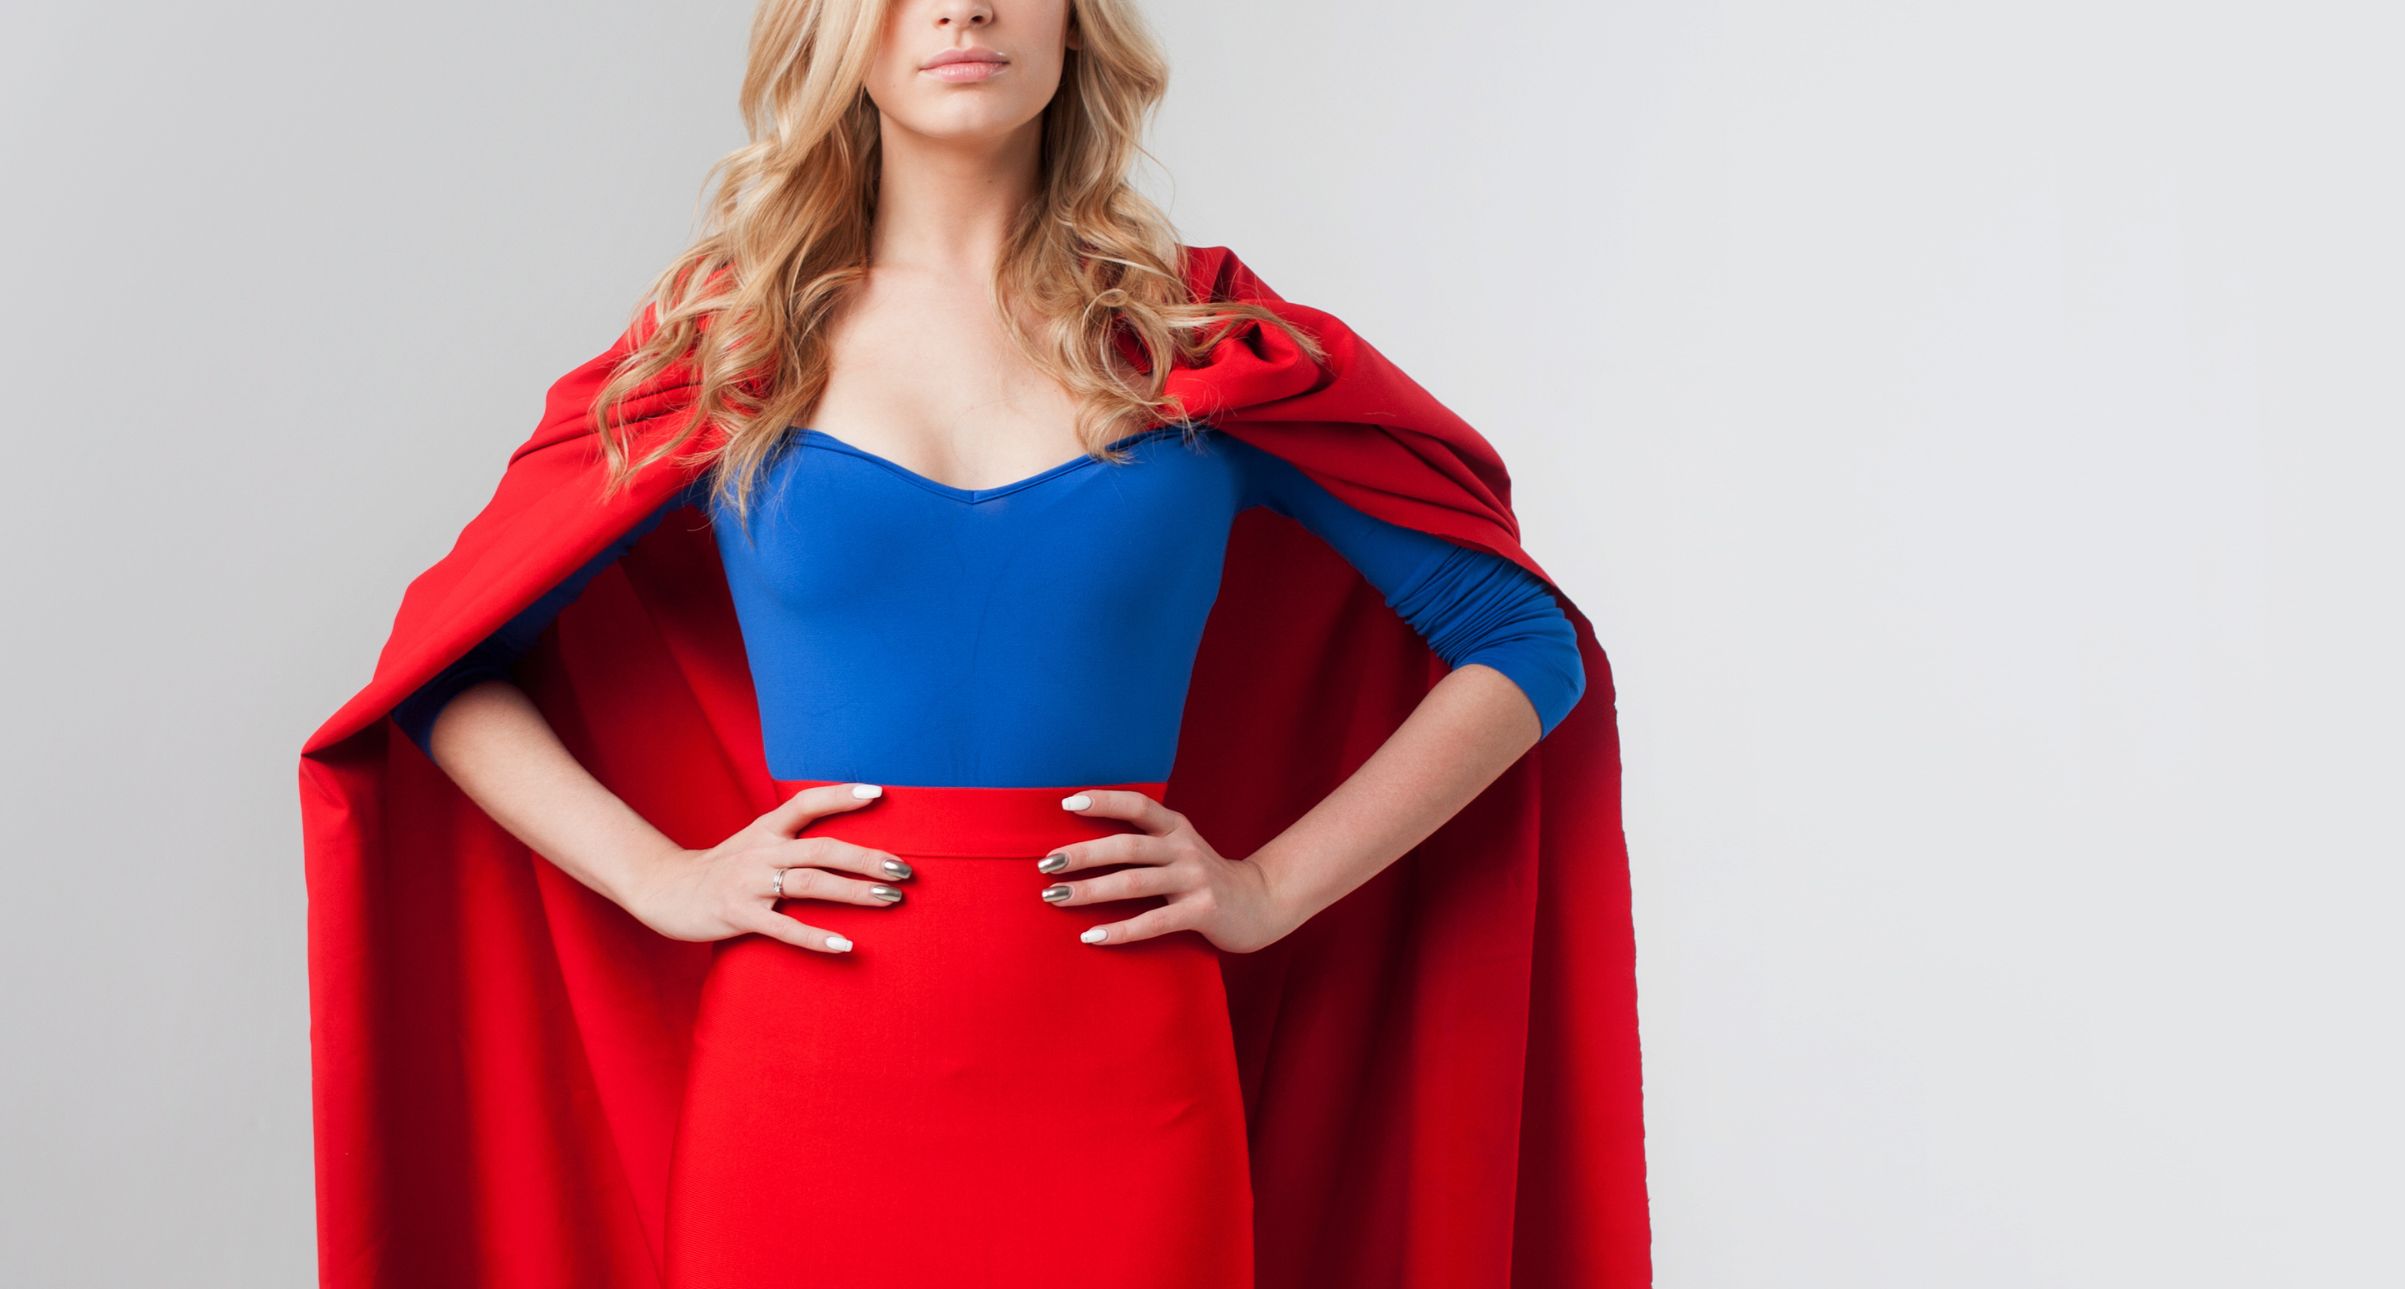 Female dressed as superwoman